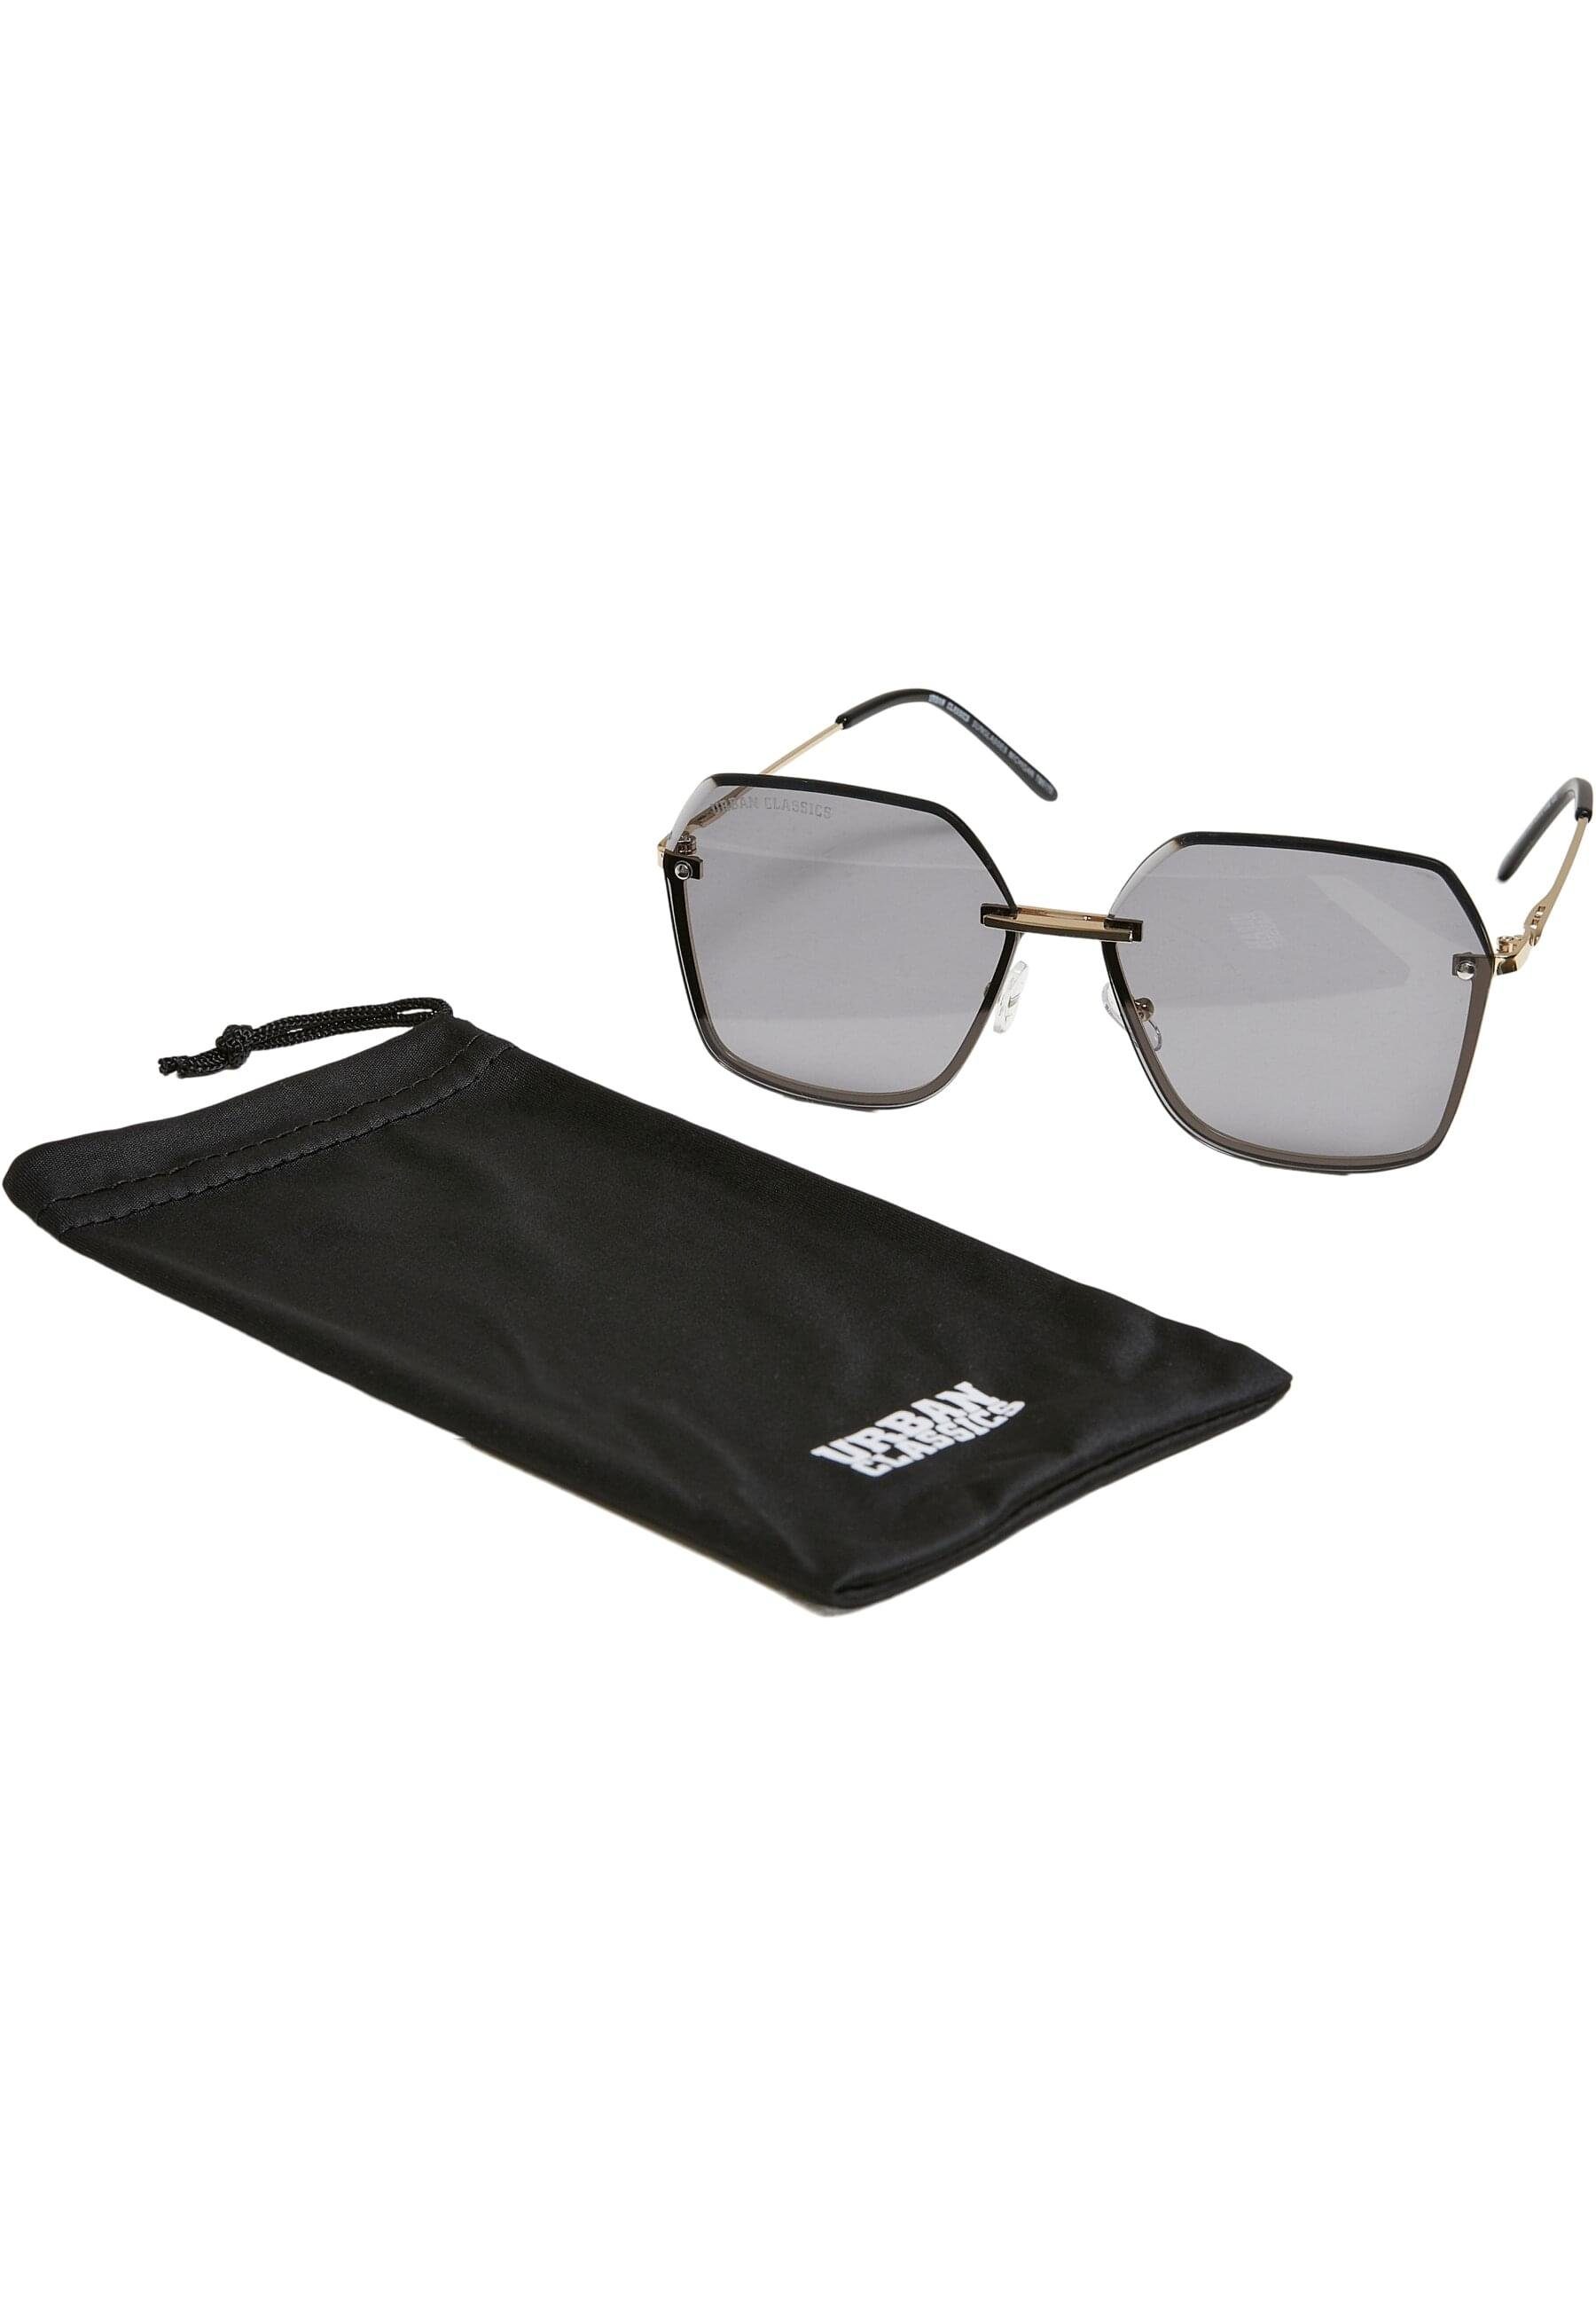 URBAN CLASSICS Sonnenbrille Unisex Sunglasses Michigan black/gold